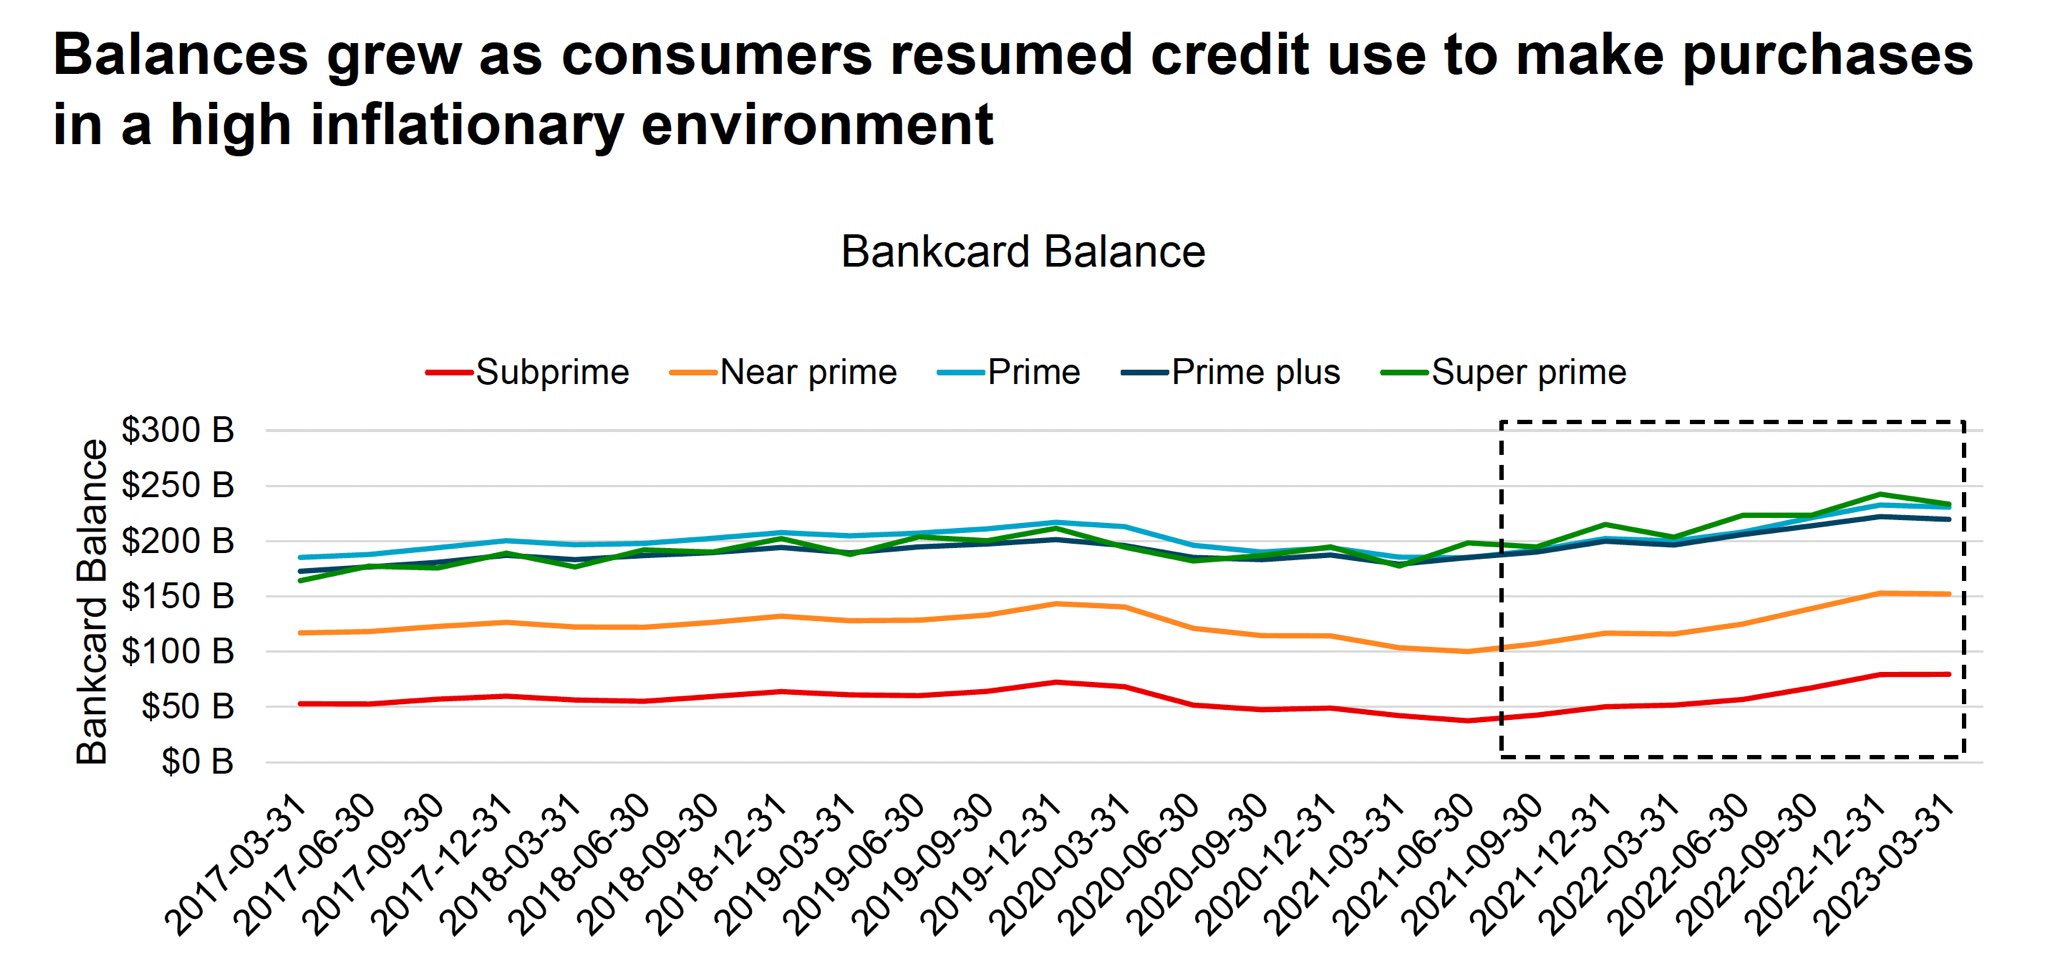 Credit Card Balances by Risk Band